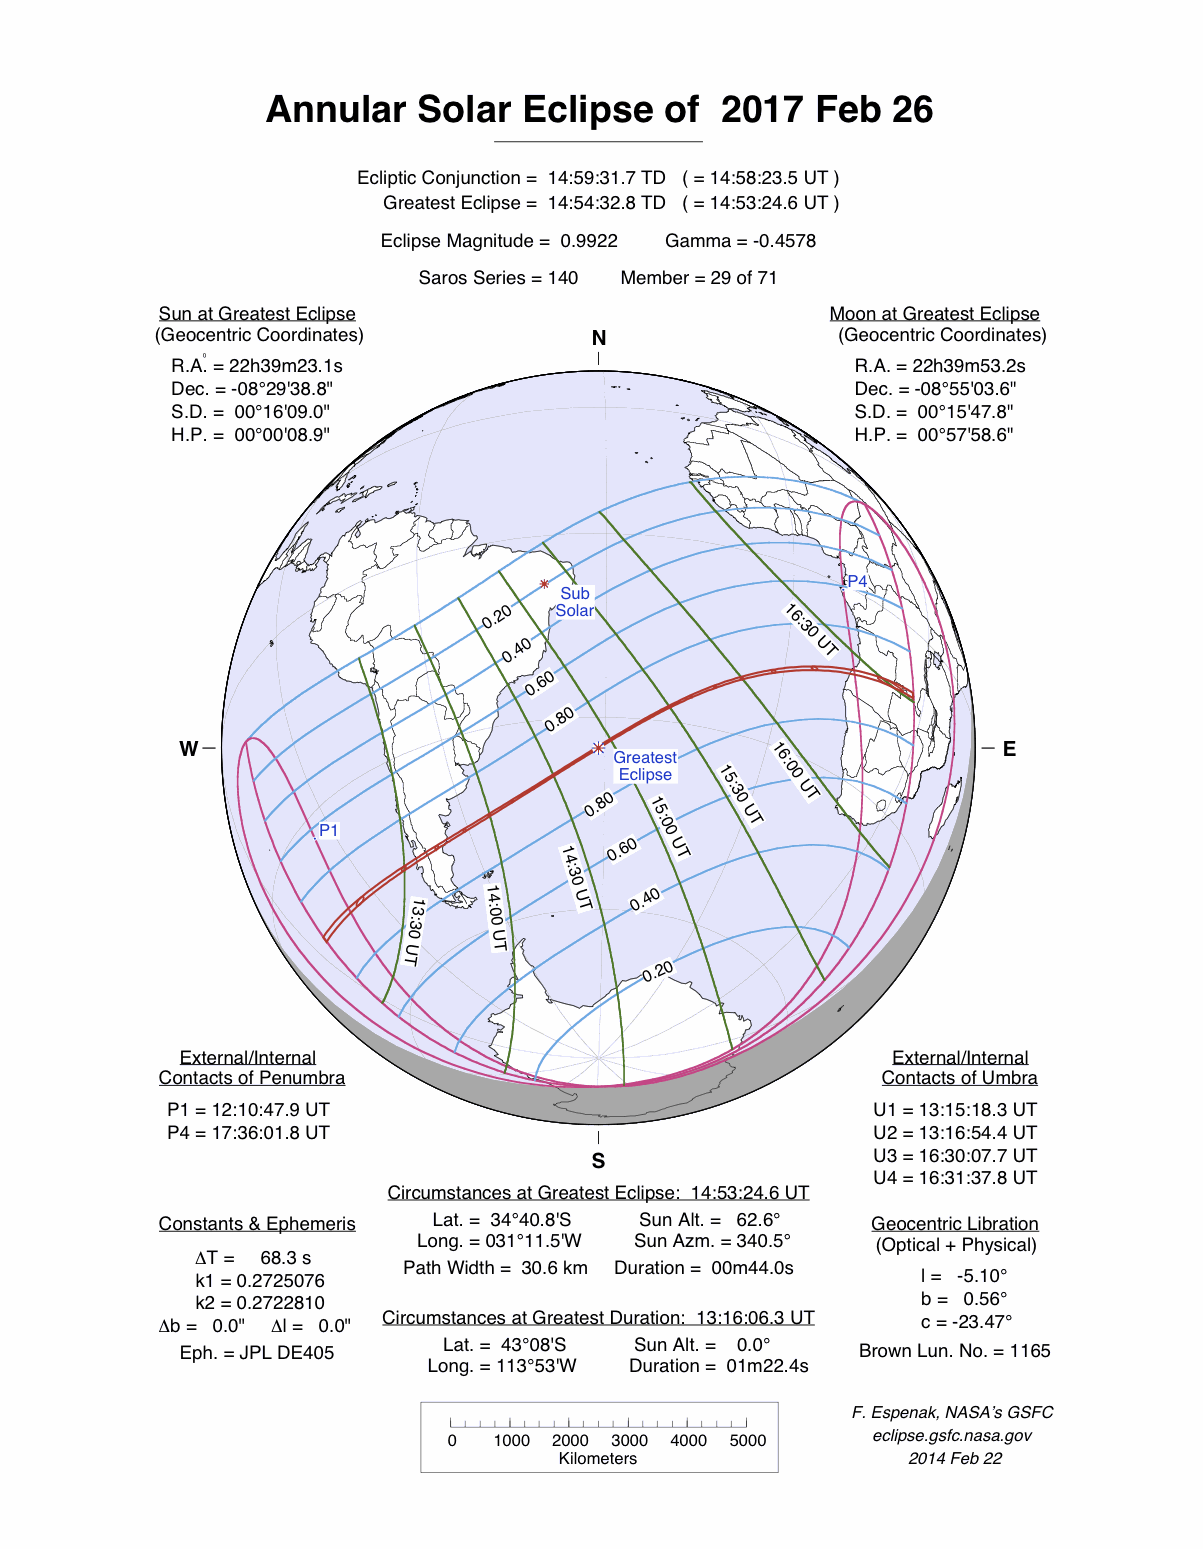 https://eclipse.gsfc.nasa.gov/SEplot/SEplot2001/SE2017Feb26A.GIF